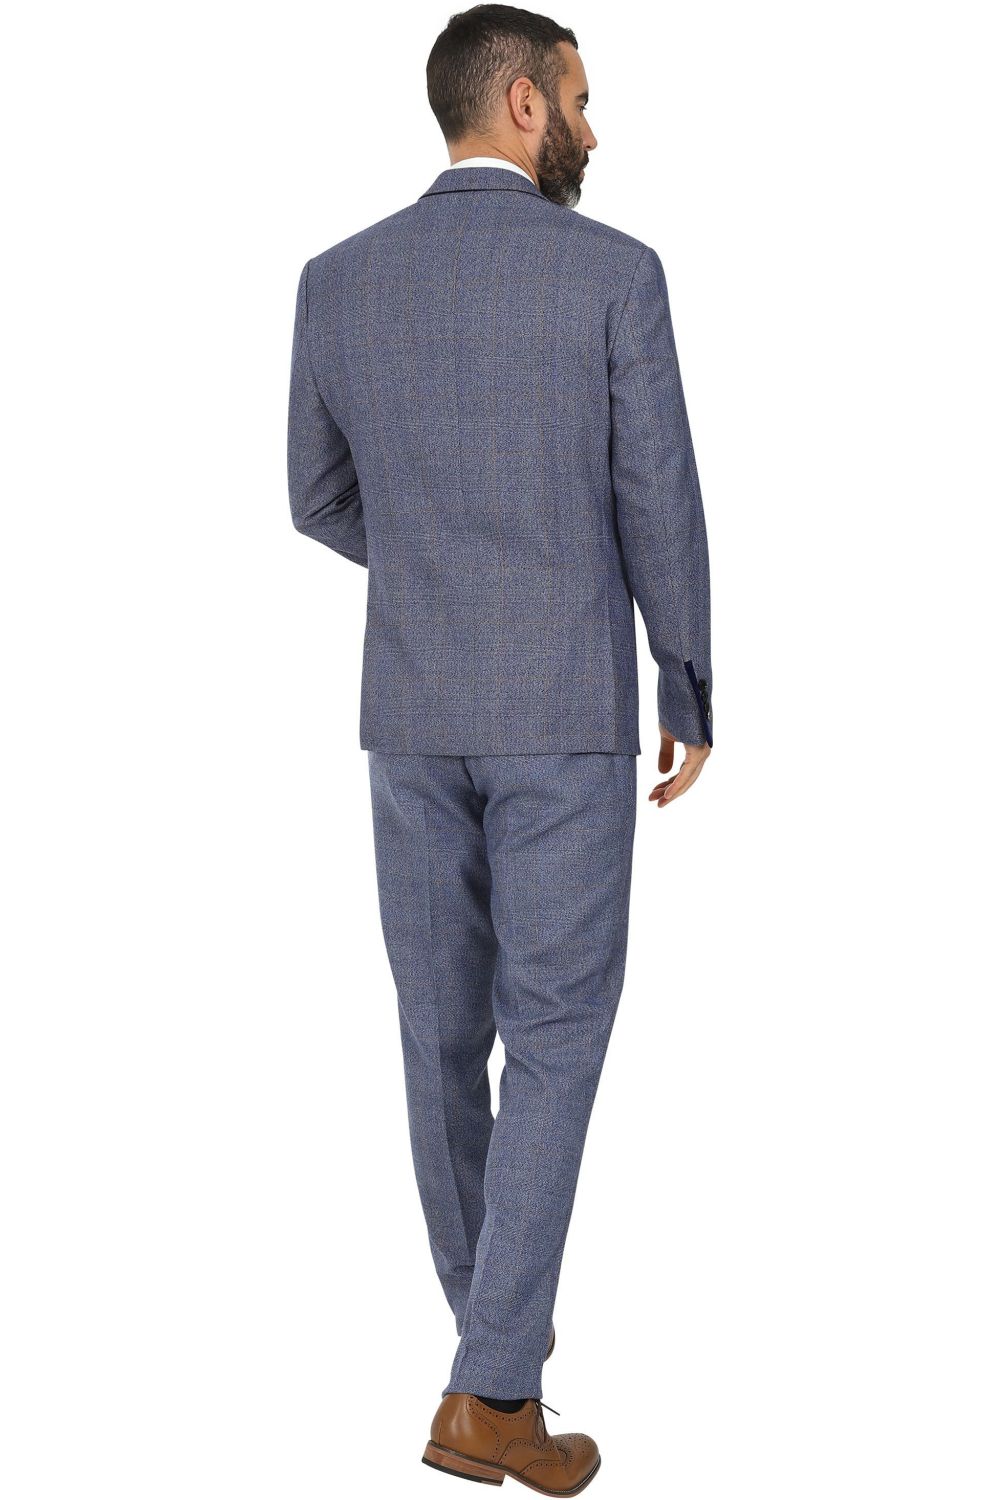 Jenson Samuel Warwick Blue Check & Kelvin Royal Waistcoat Three Piece Suit 